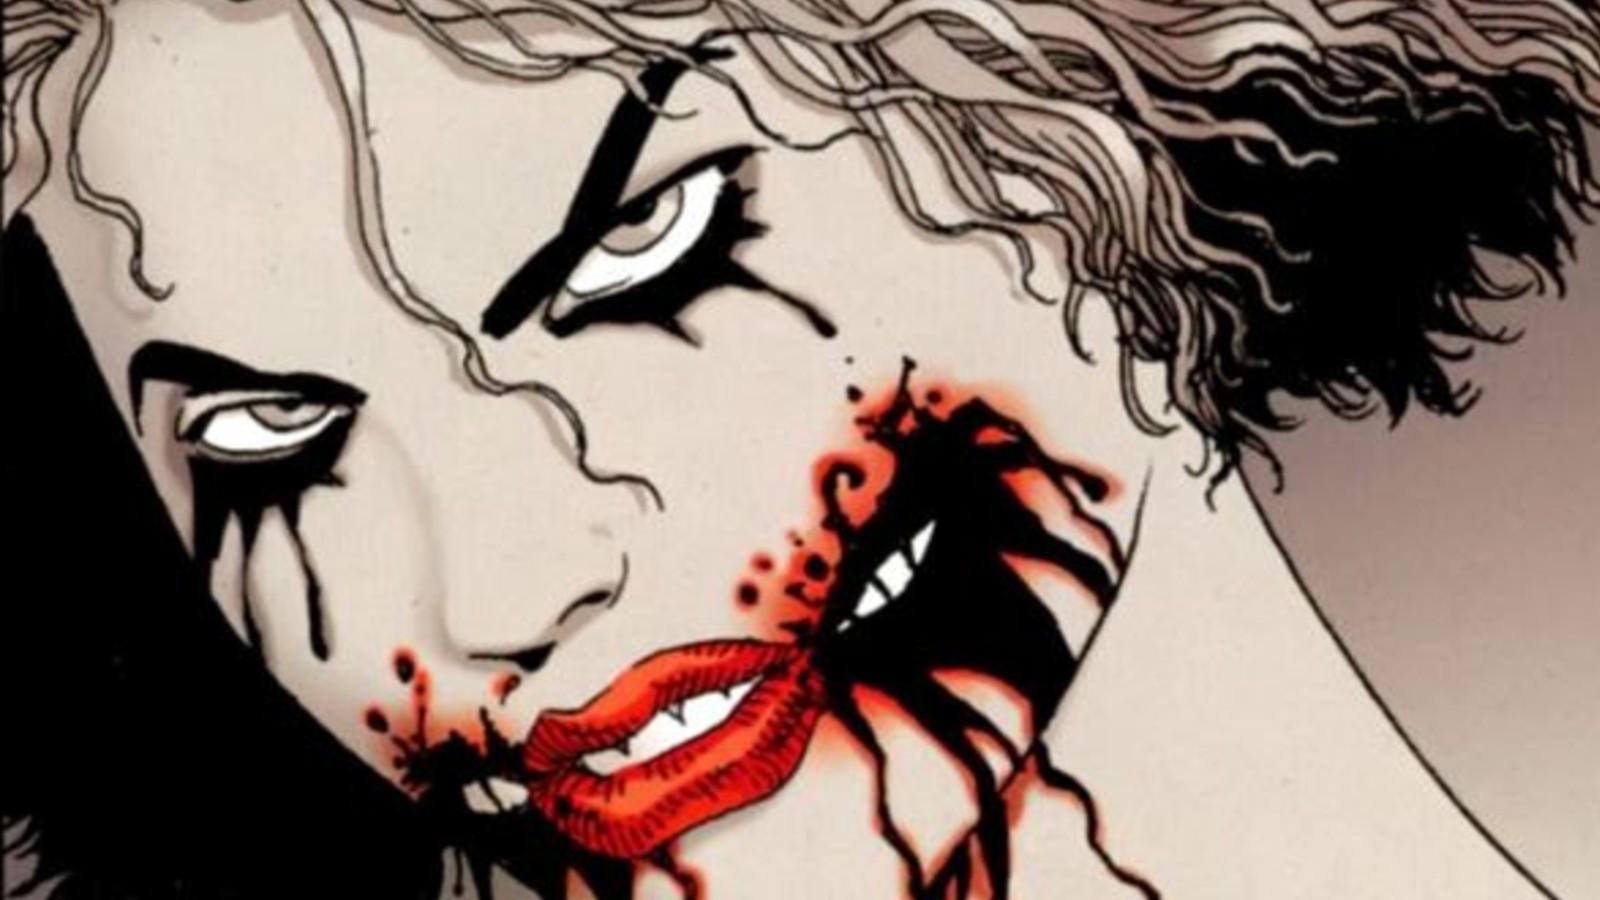 Martha Wayne as the Joker in DC Comics